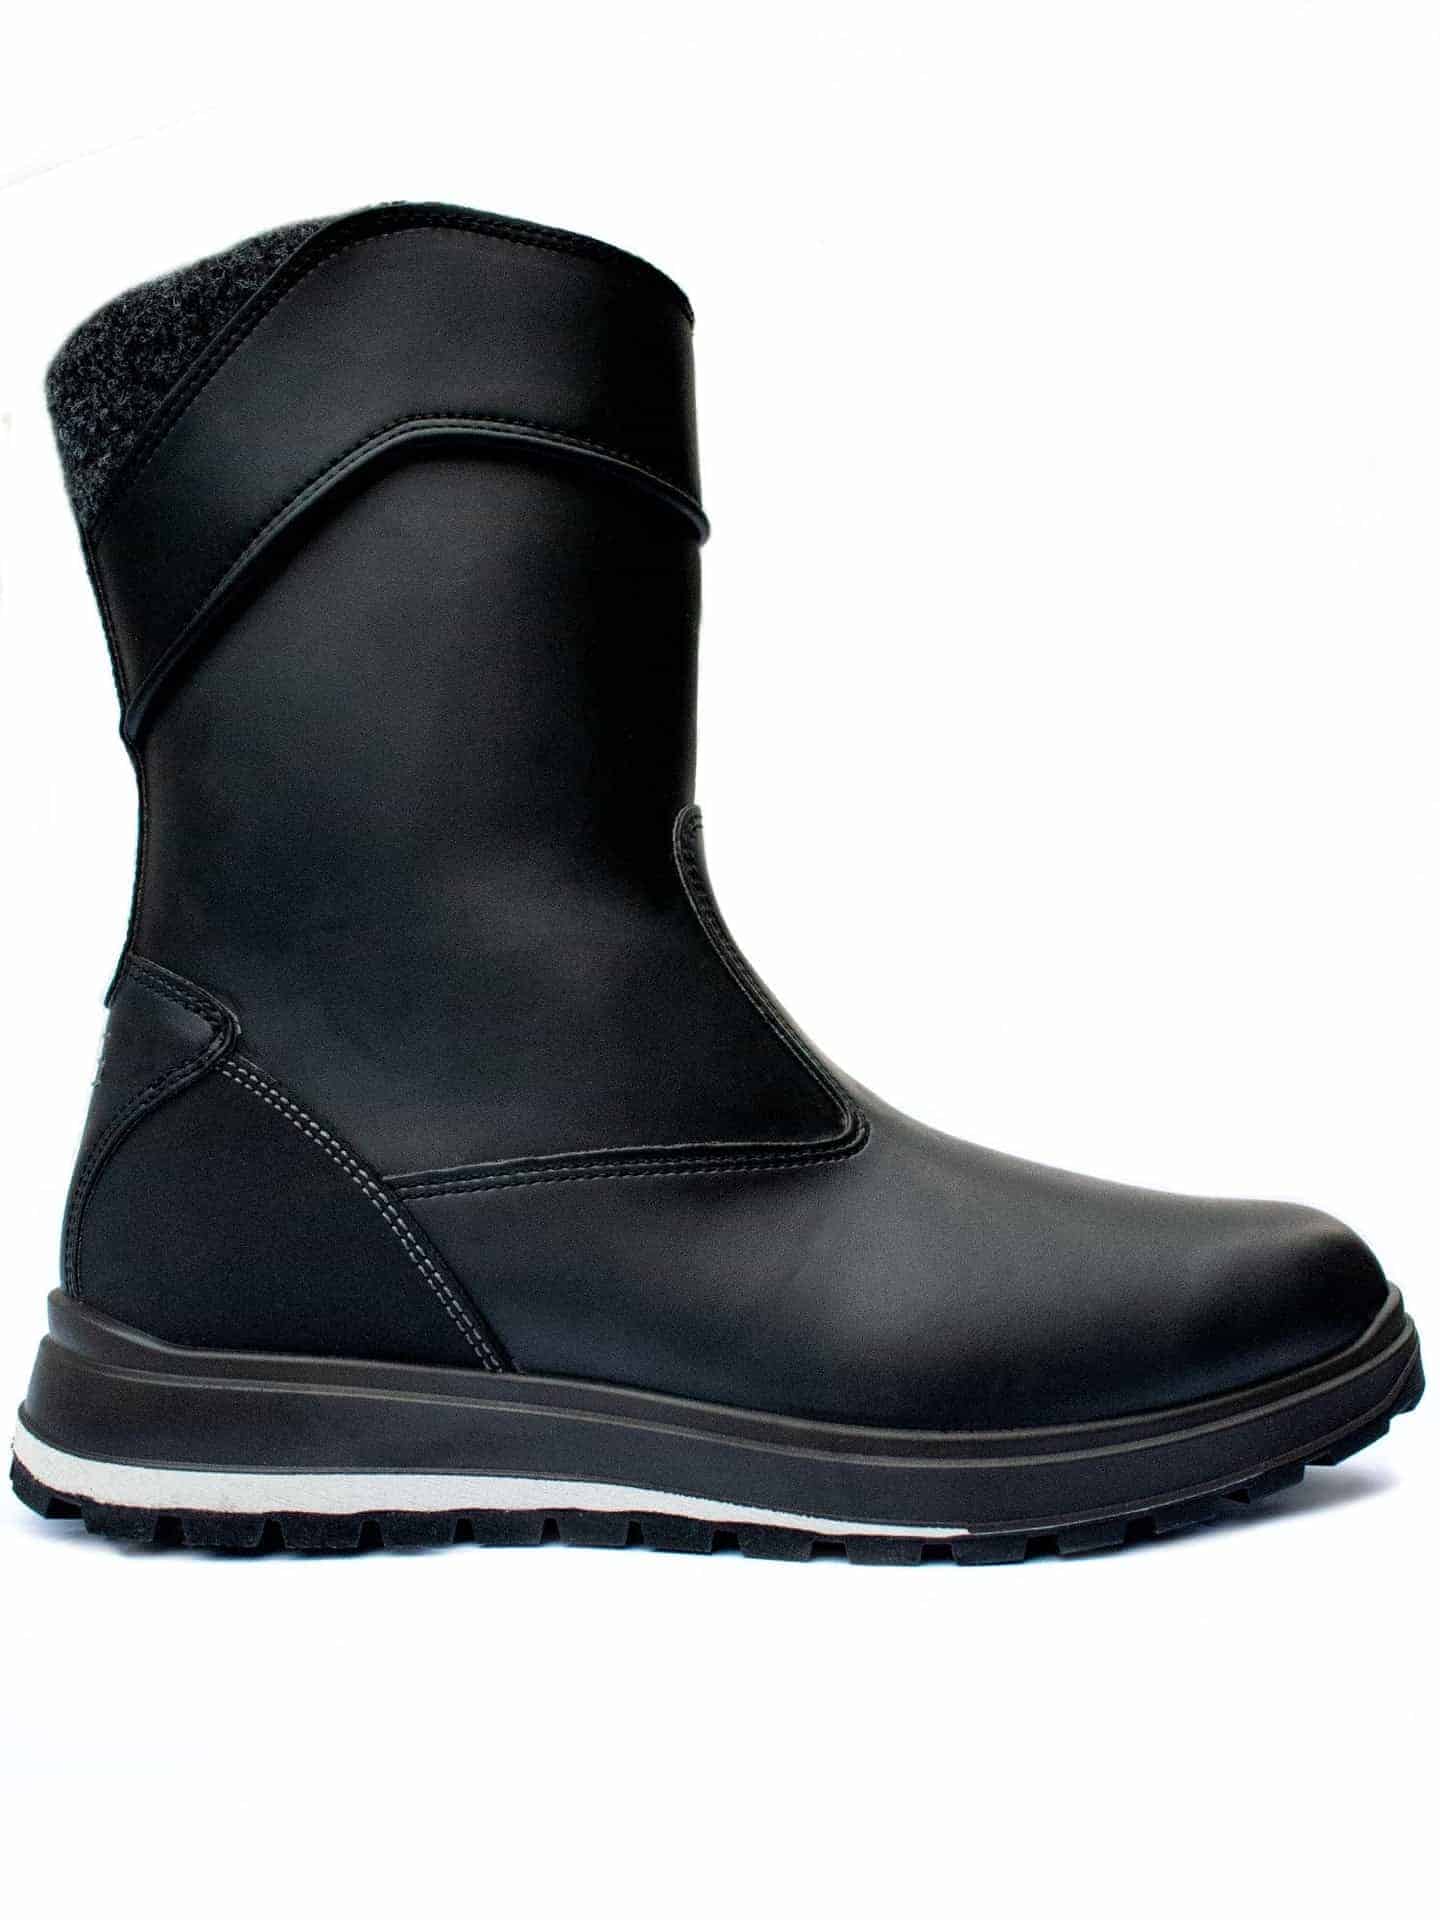 Black vegan leather mid calf boots